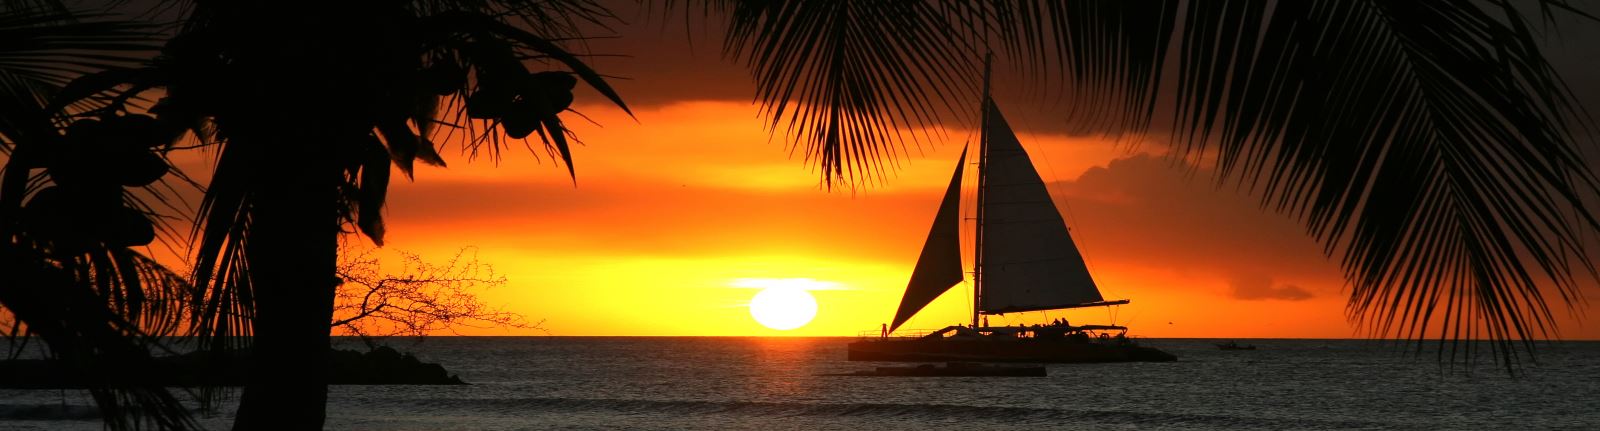 aruba sunset weddings sailboat palm trees